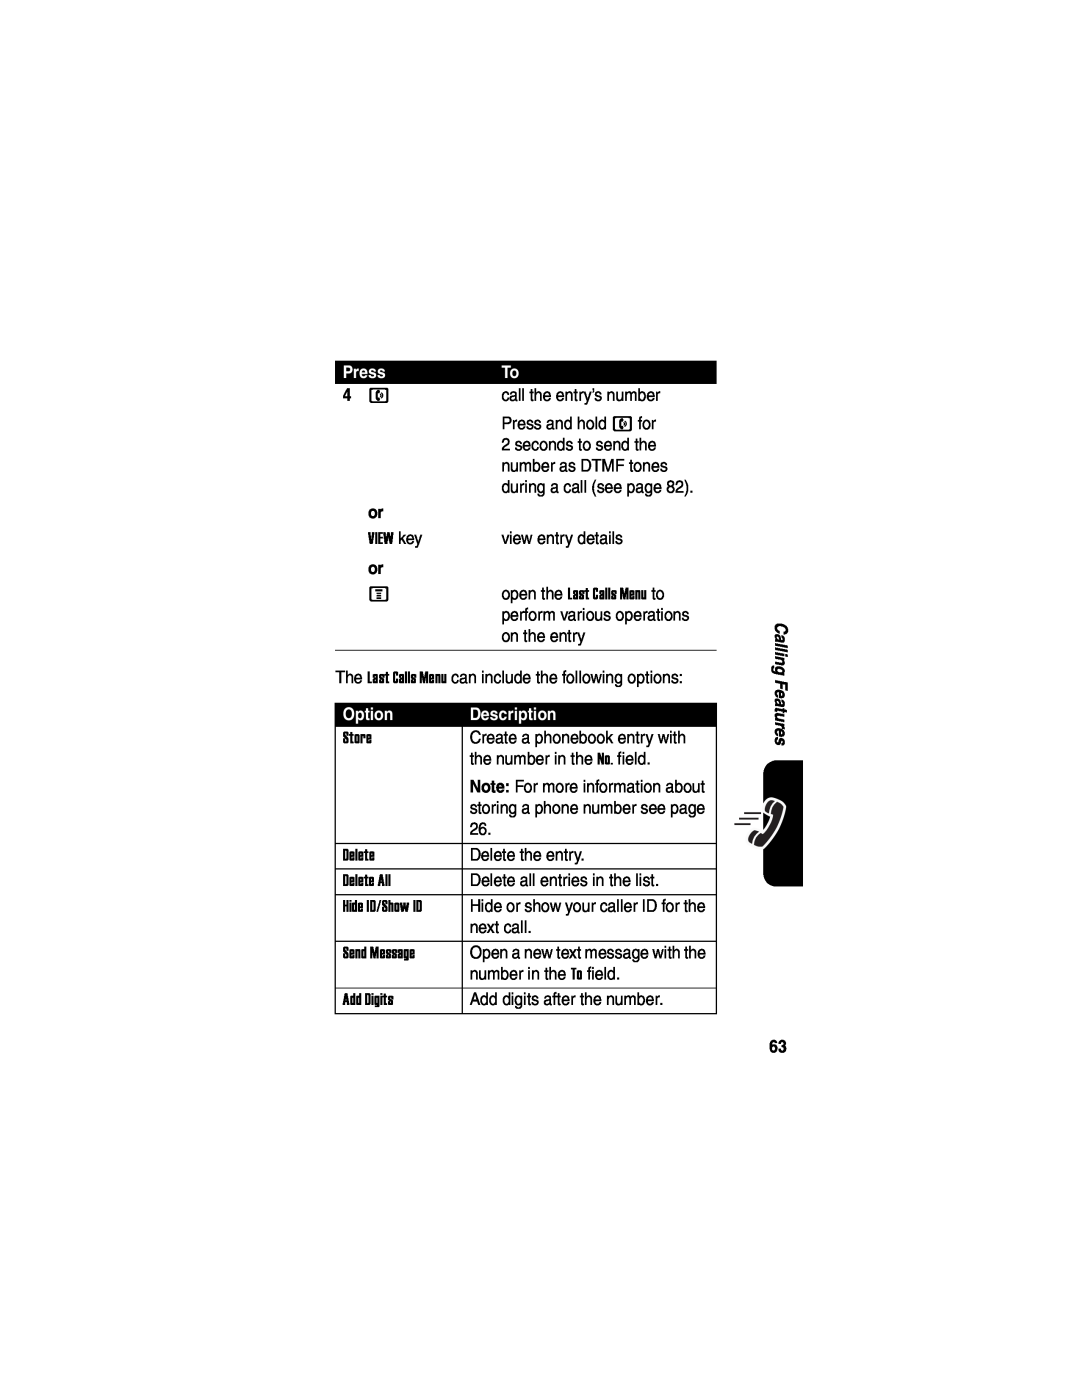 Motorola V635 manual 4 n, Press, call the entry’s number, Option, Description 